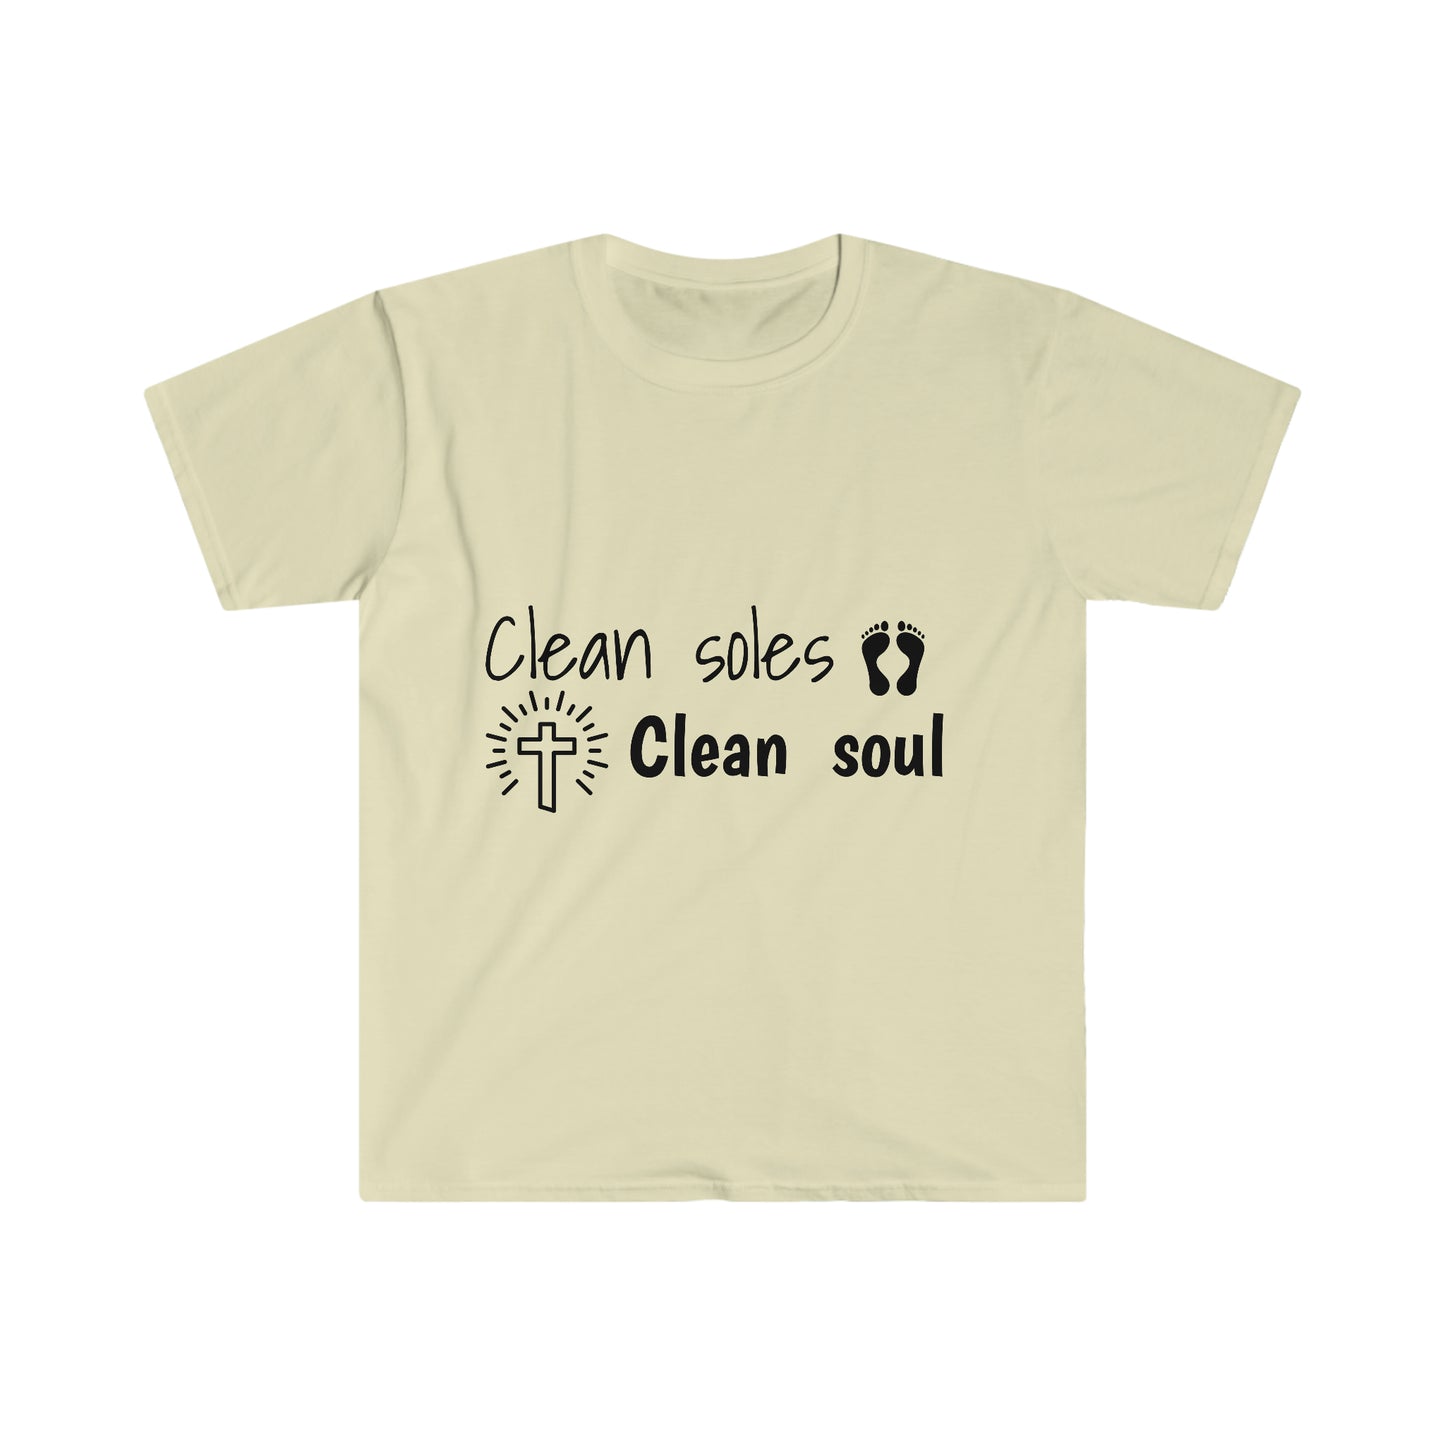 Clean soles, clean soul - The Wooden Boar Soap Company